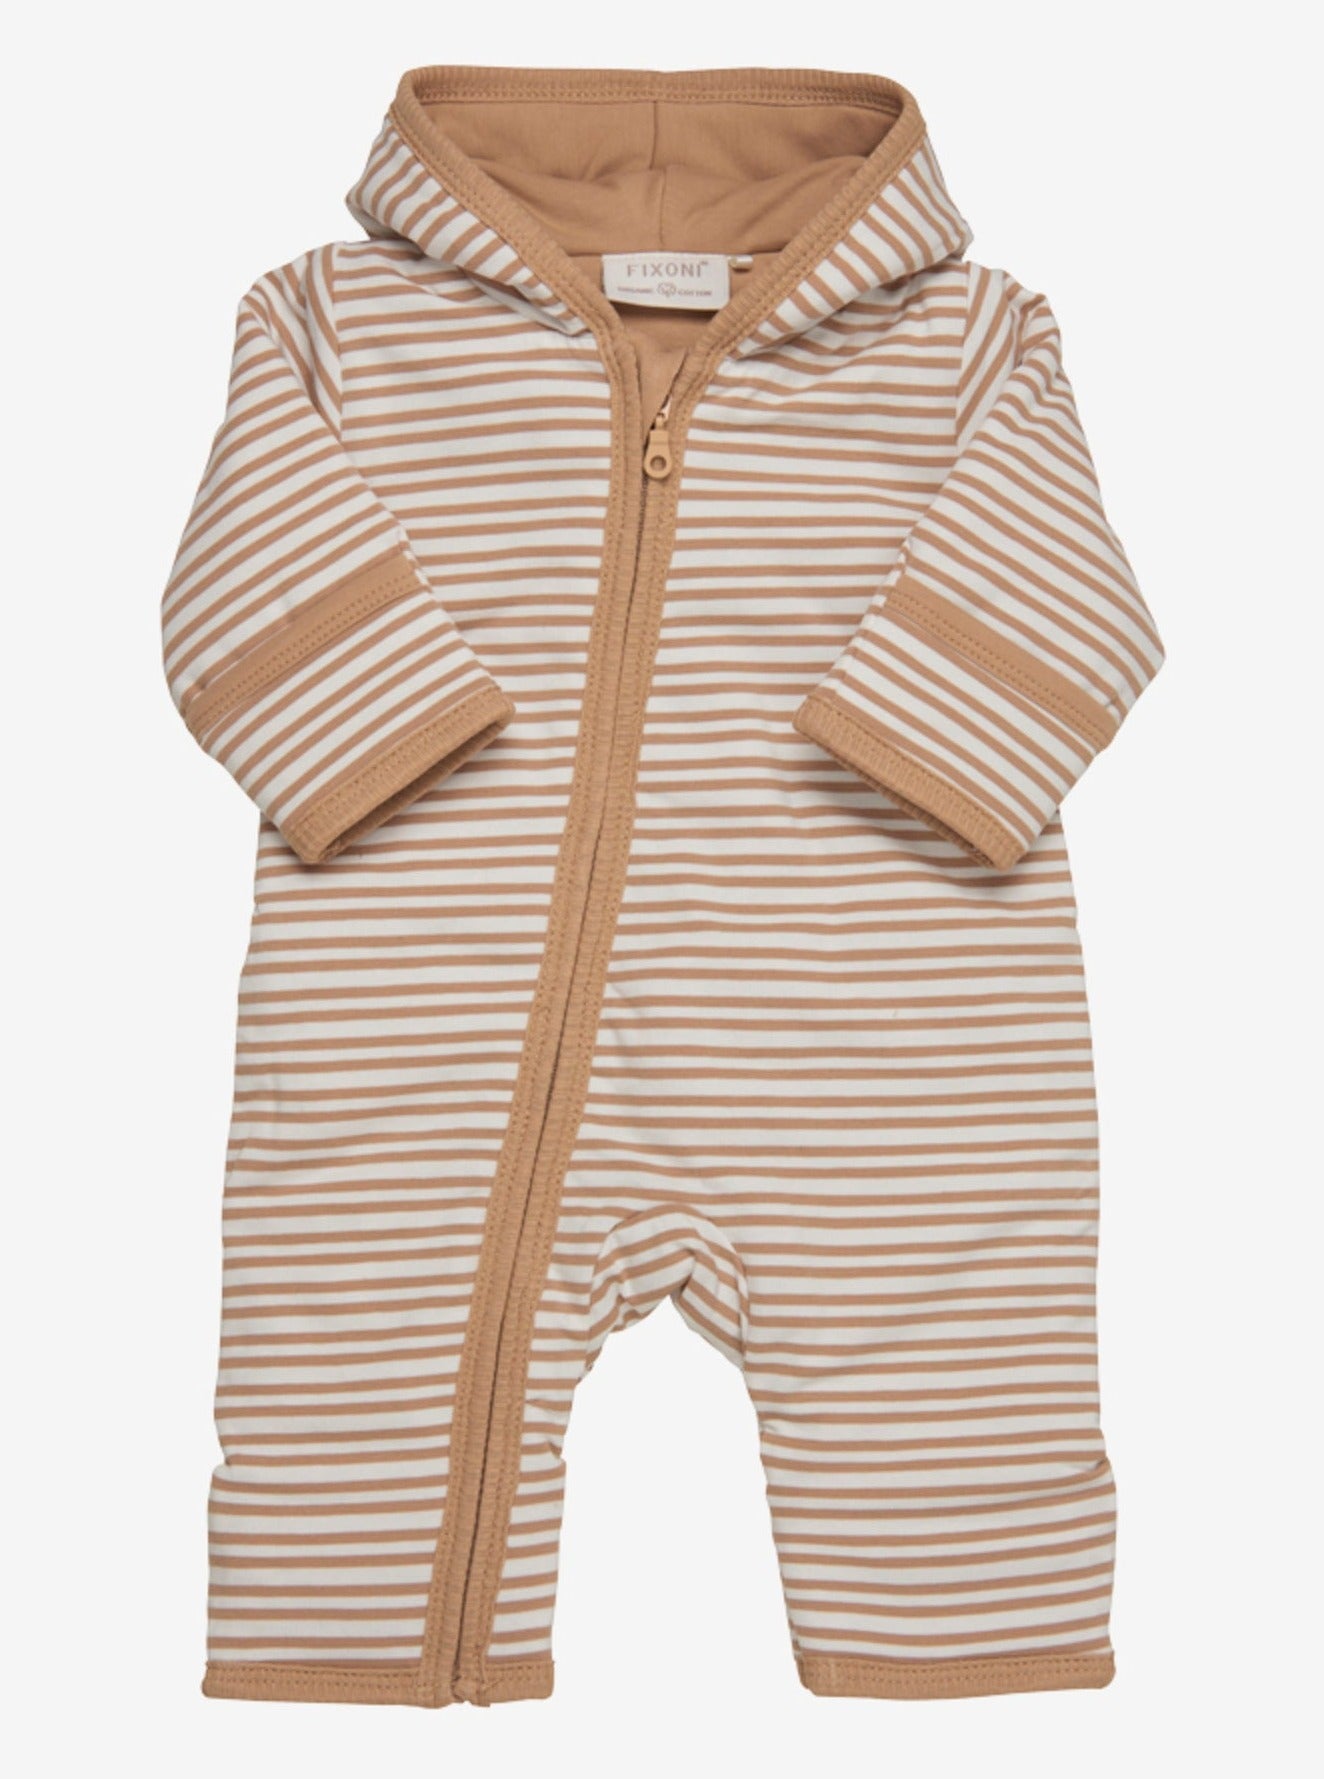 Fixoni Brown and Cream Striped Tiny Baby Pramsuit - Snowsuit / Pramsuit - Fixoni